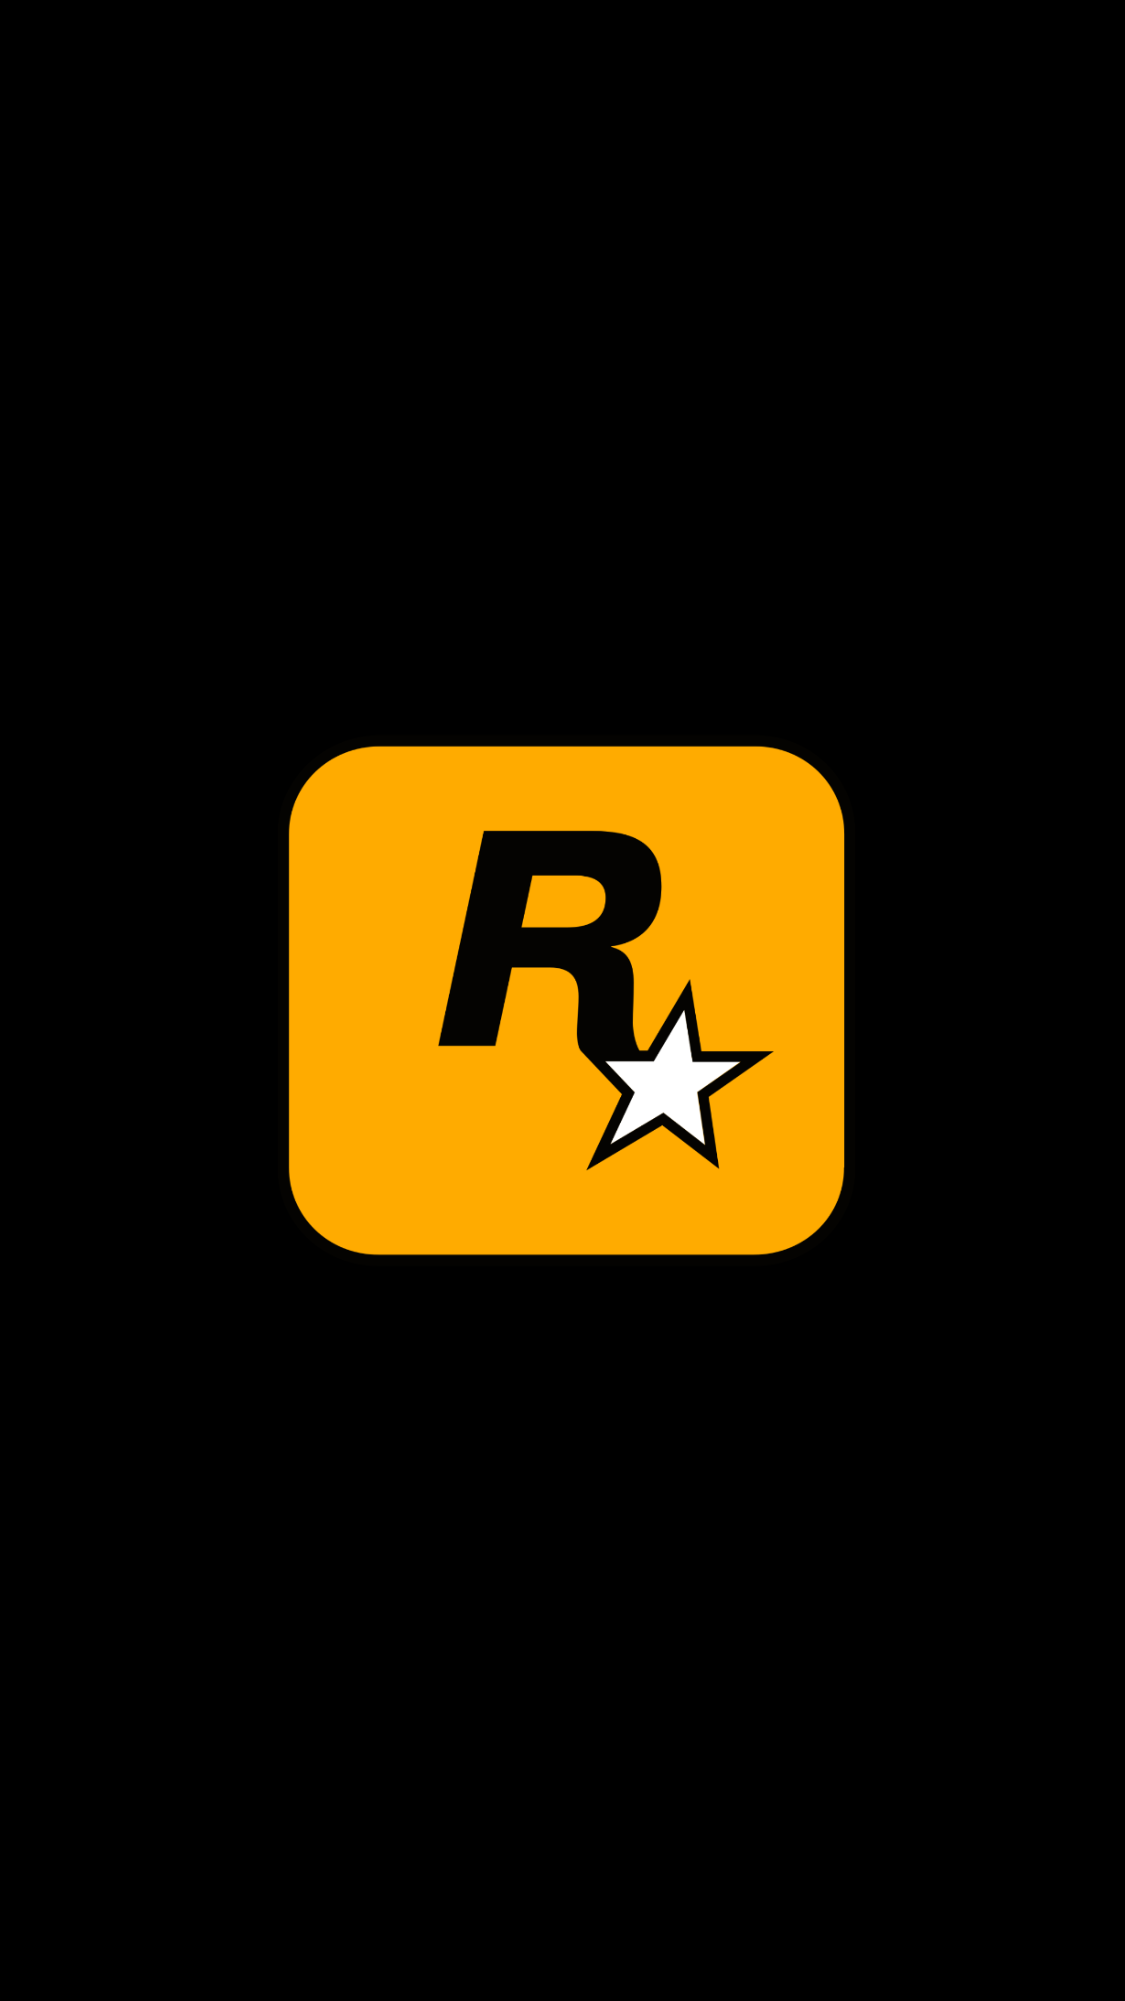 rockstar games logo. Rockstar games logo, Rockstar games, Gaming wallpaper